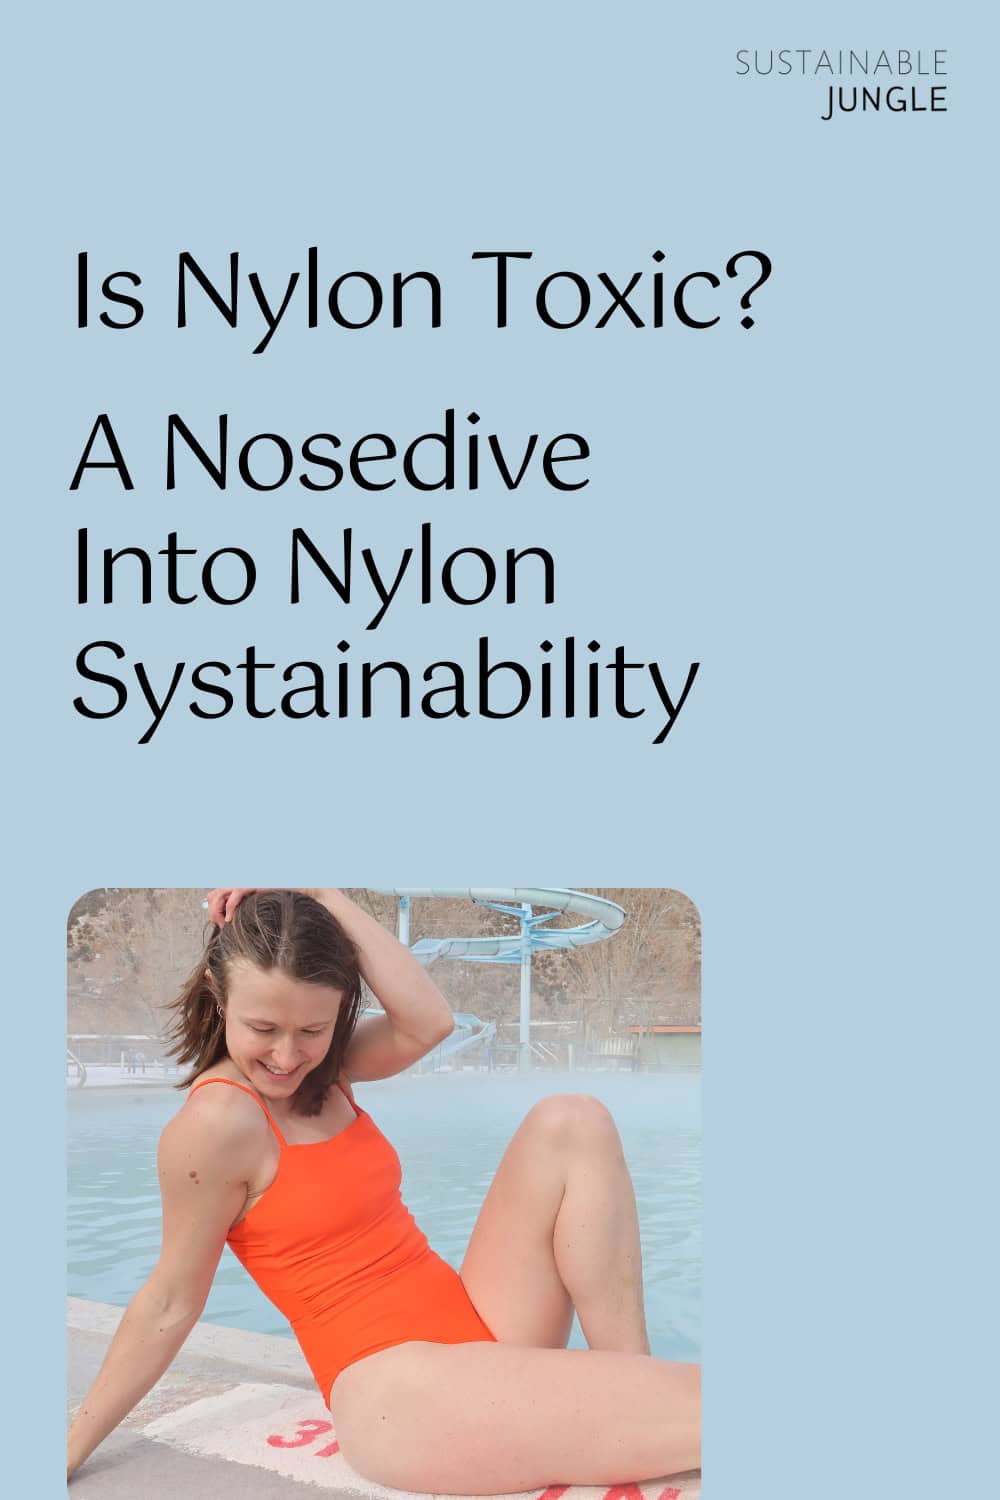 Is Nylon Toxic? A Nosedive Into Nylon Systainability Image by Sustainable Jungle #isnylontoxic #isnylonnontoxictowear #nylonfabric #isnylonsustainable #isnylonecofriendly #recyclednylon #sustainablejungle